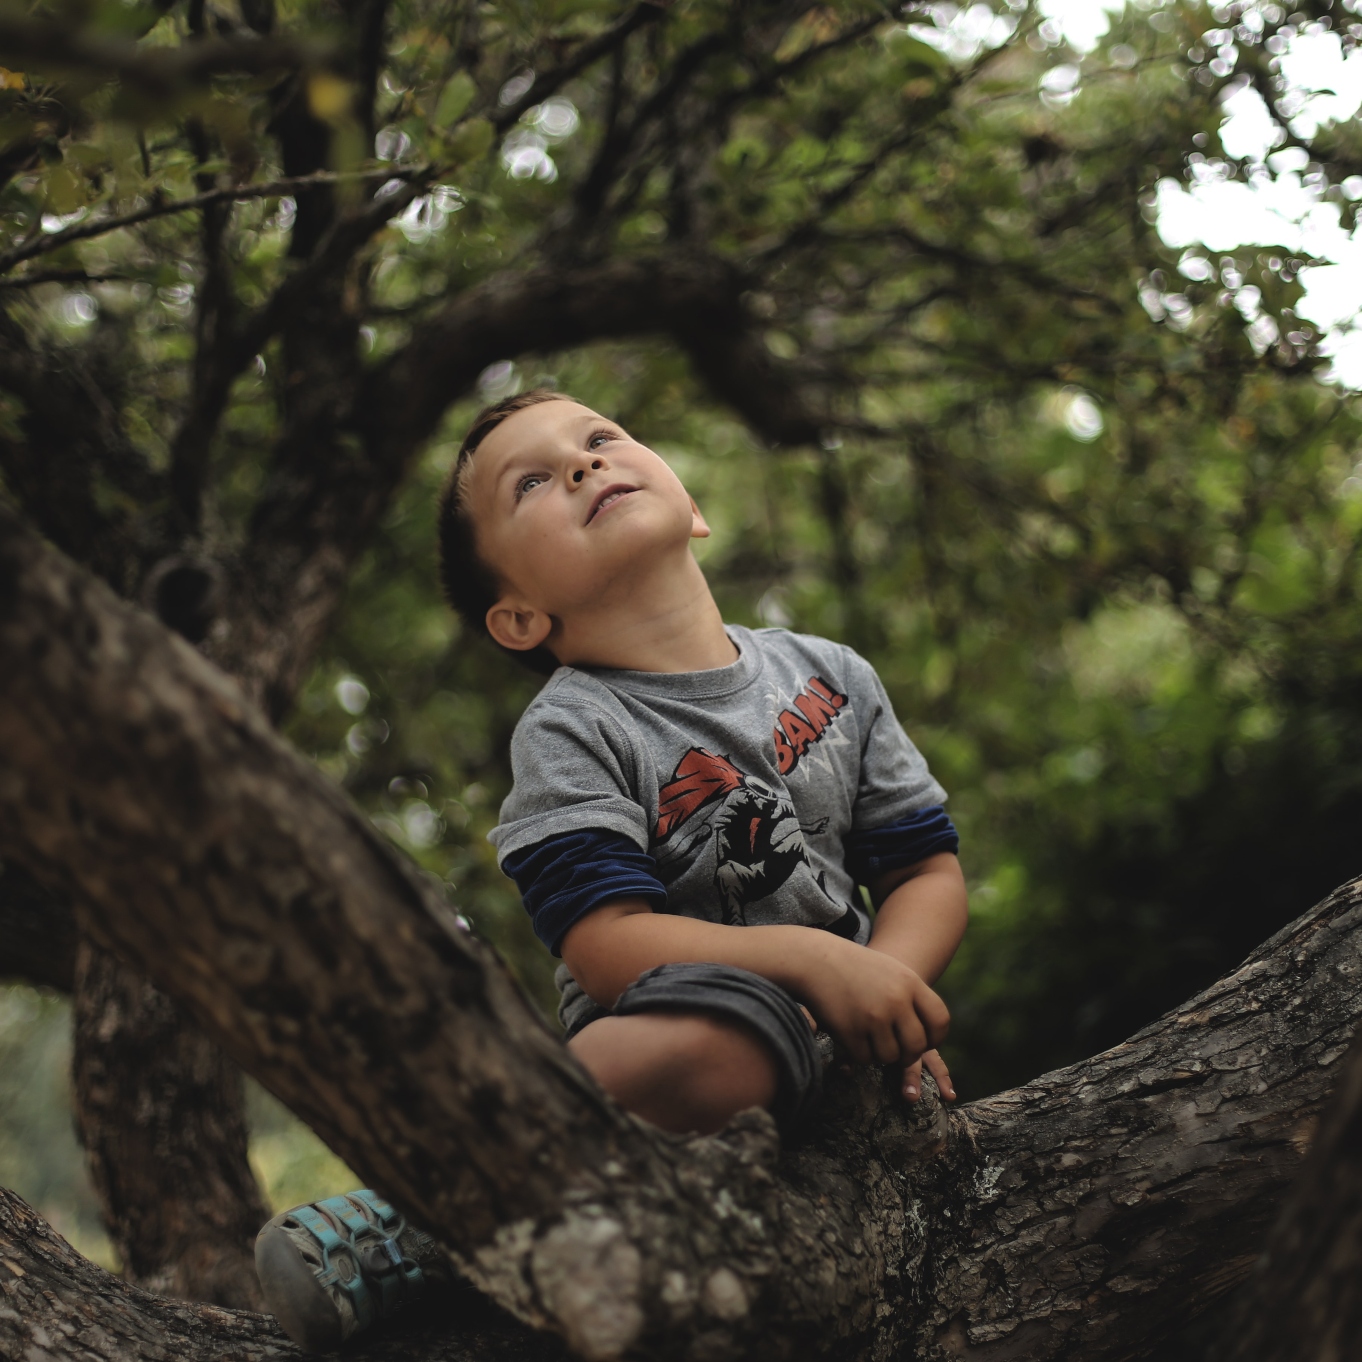 A young boy climbs a tree